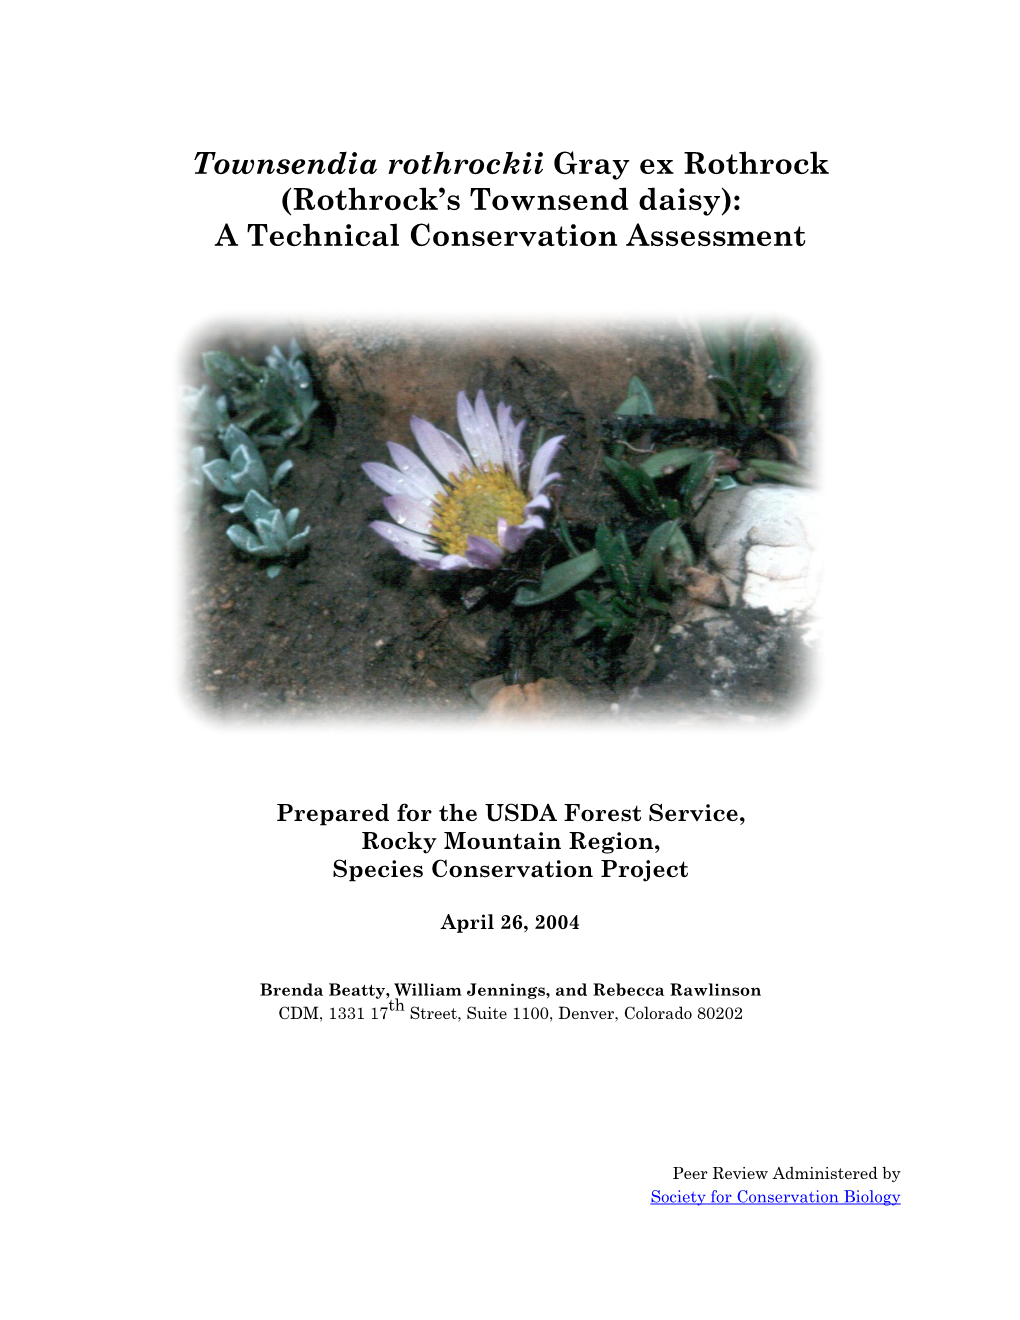 Townsendia Rothrockii Gray Ex Rothrock (Rothrock's Townsend Daisy): a Technical Conservation Assessment